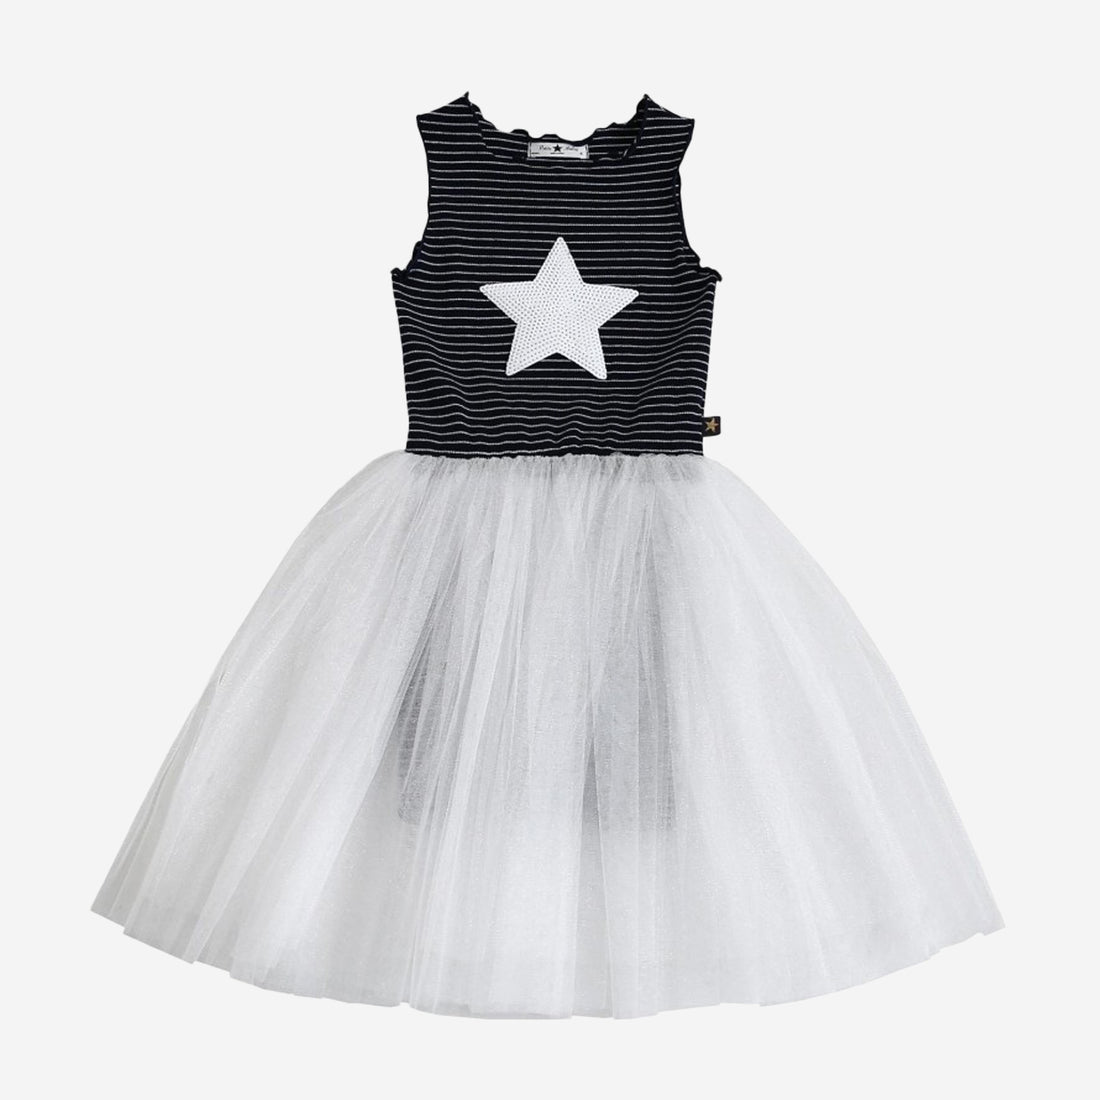 Stripe Star Tutu Dress